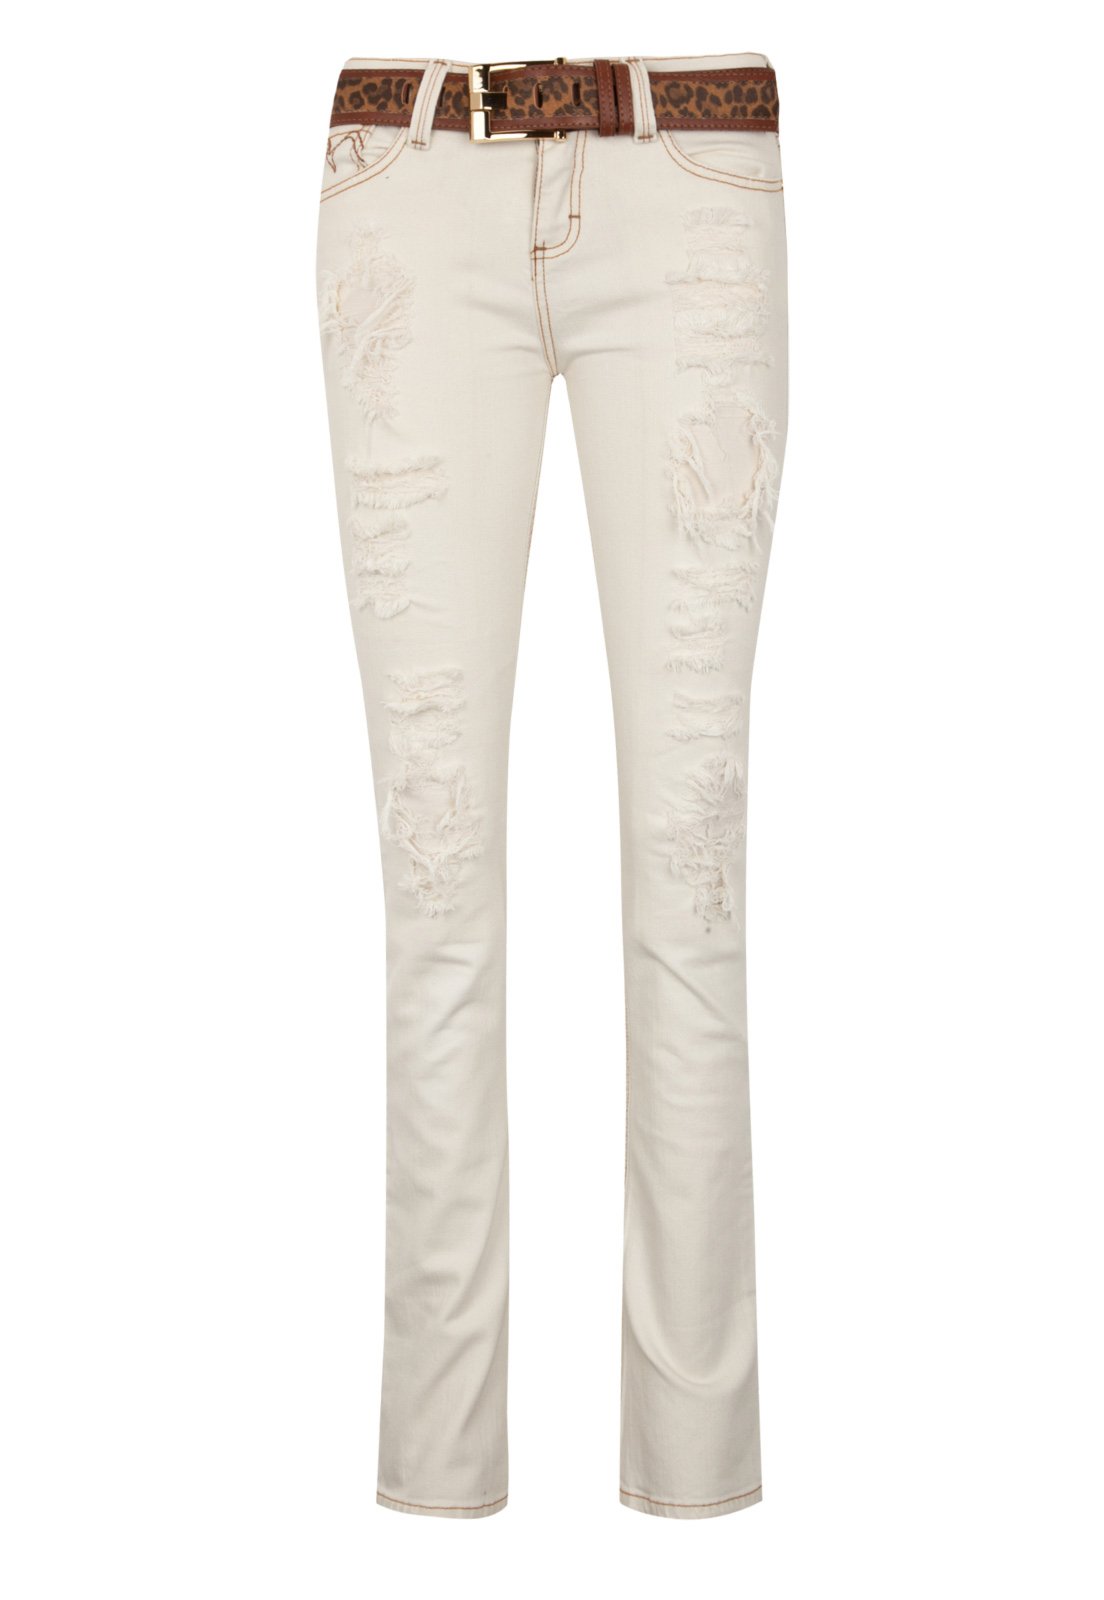 calça jeans off white feminina